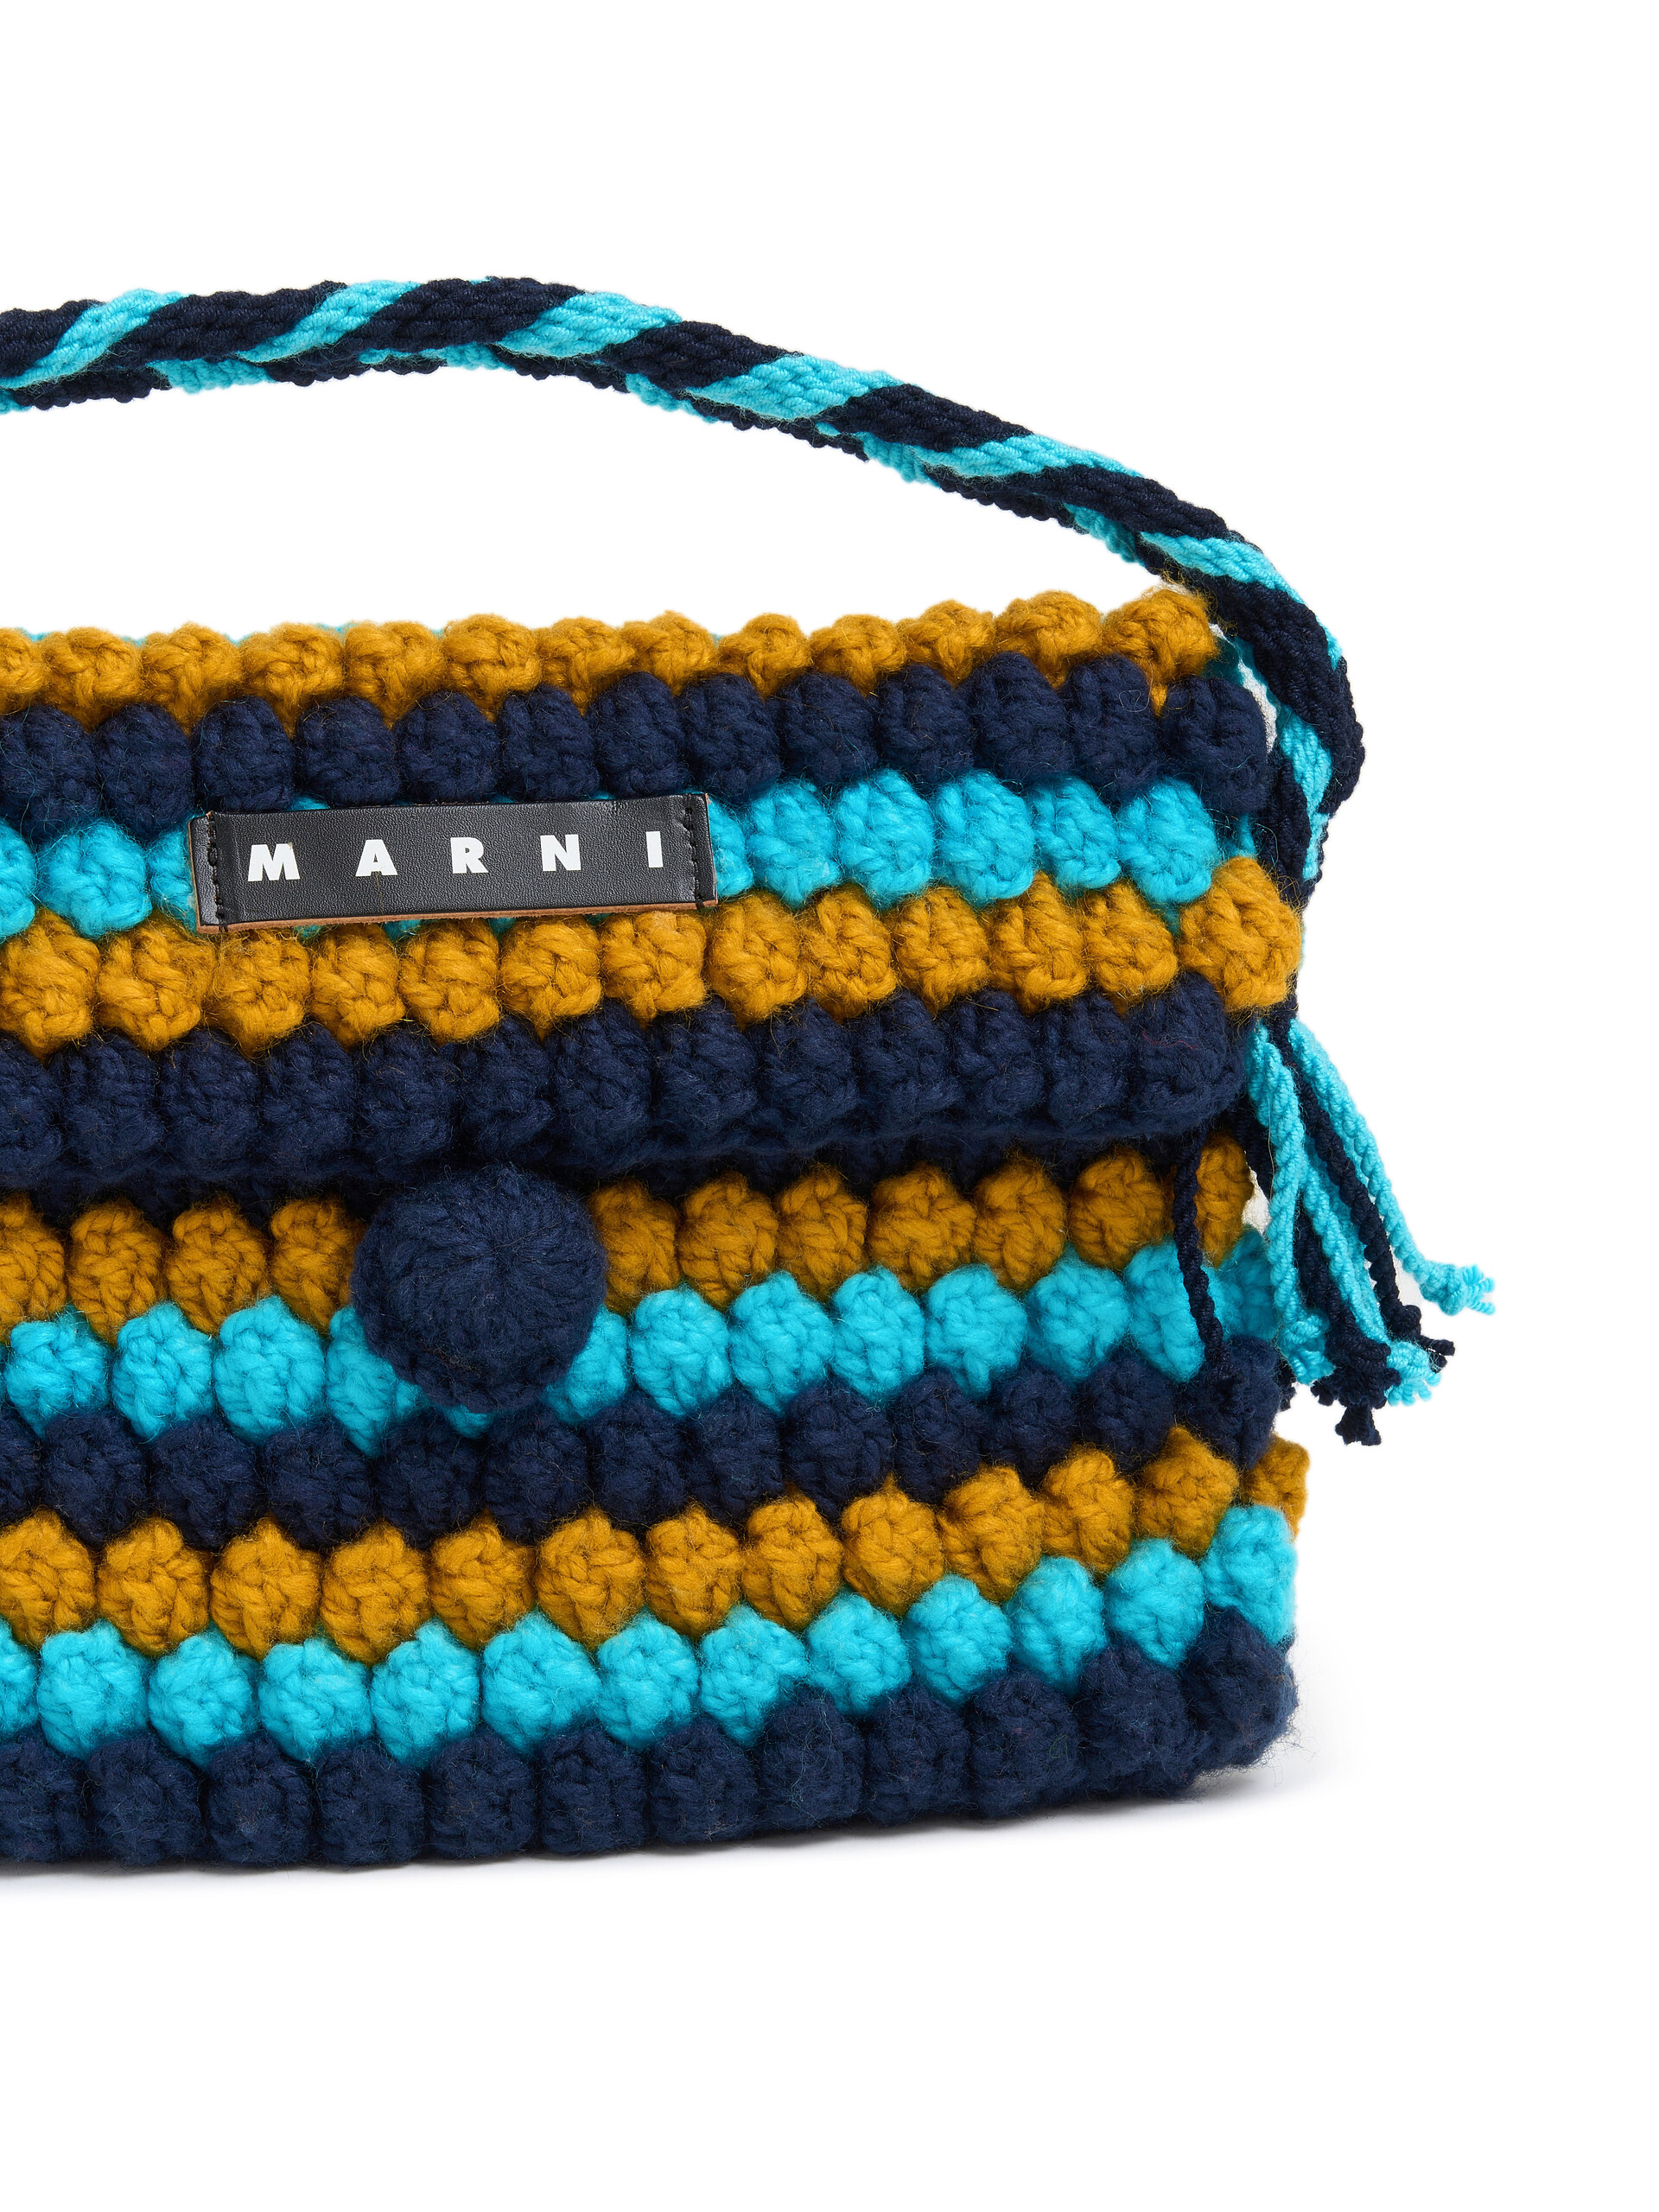 Blue Striped Crochet Marni Market Bread Handbag - Shopping Bags - Image 4